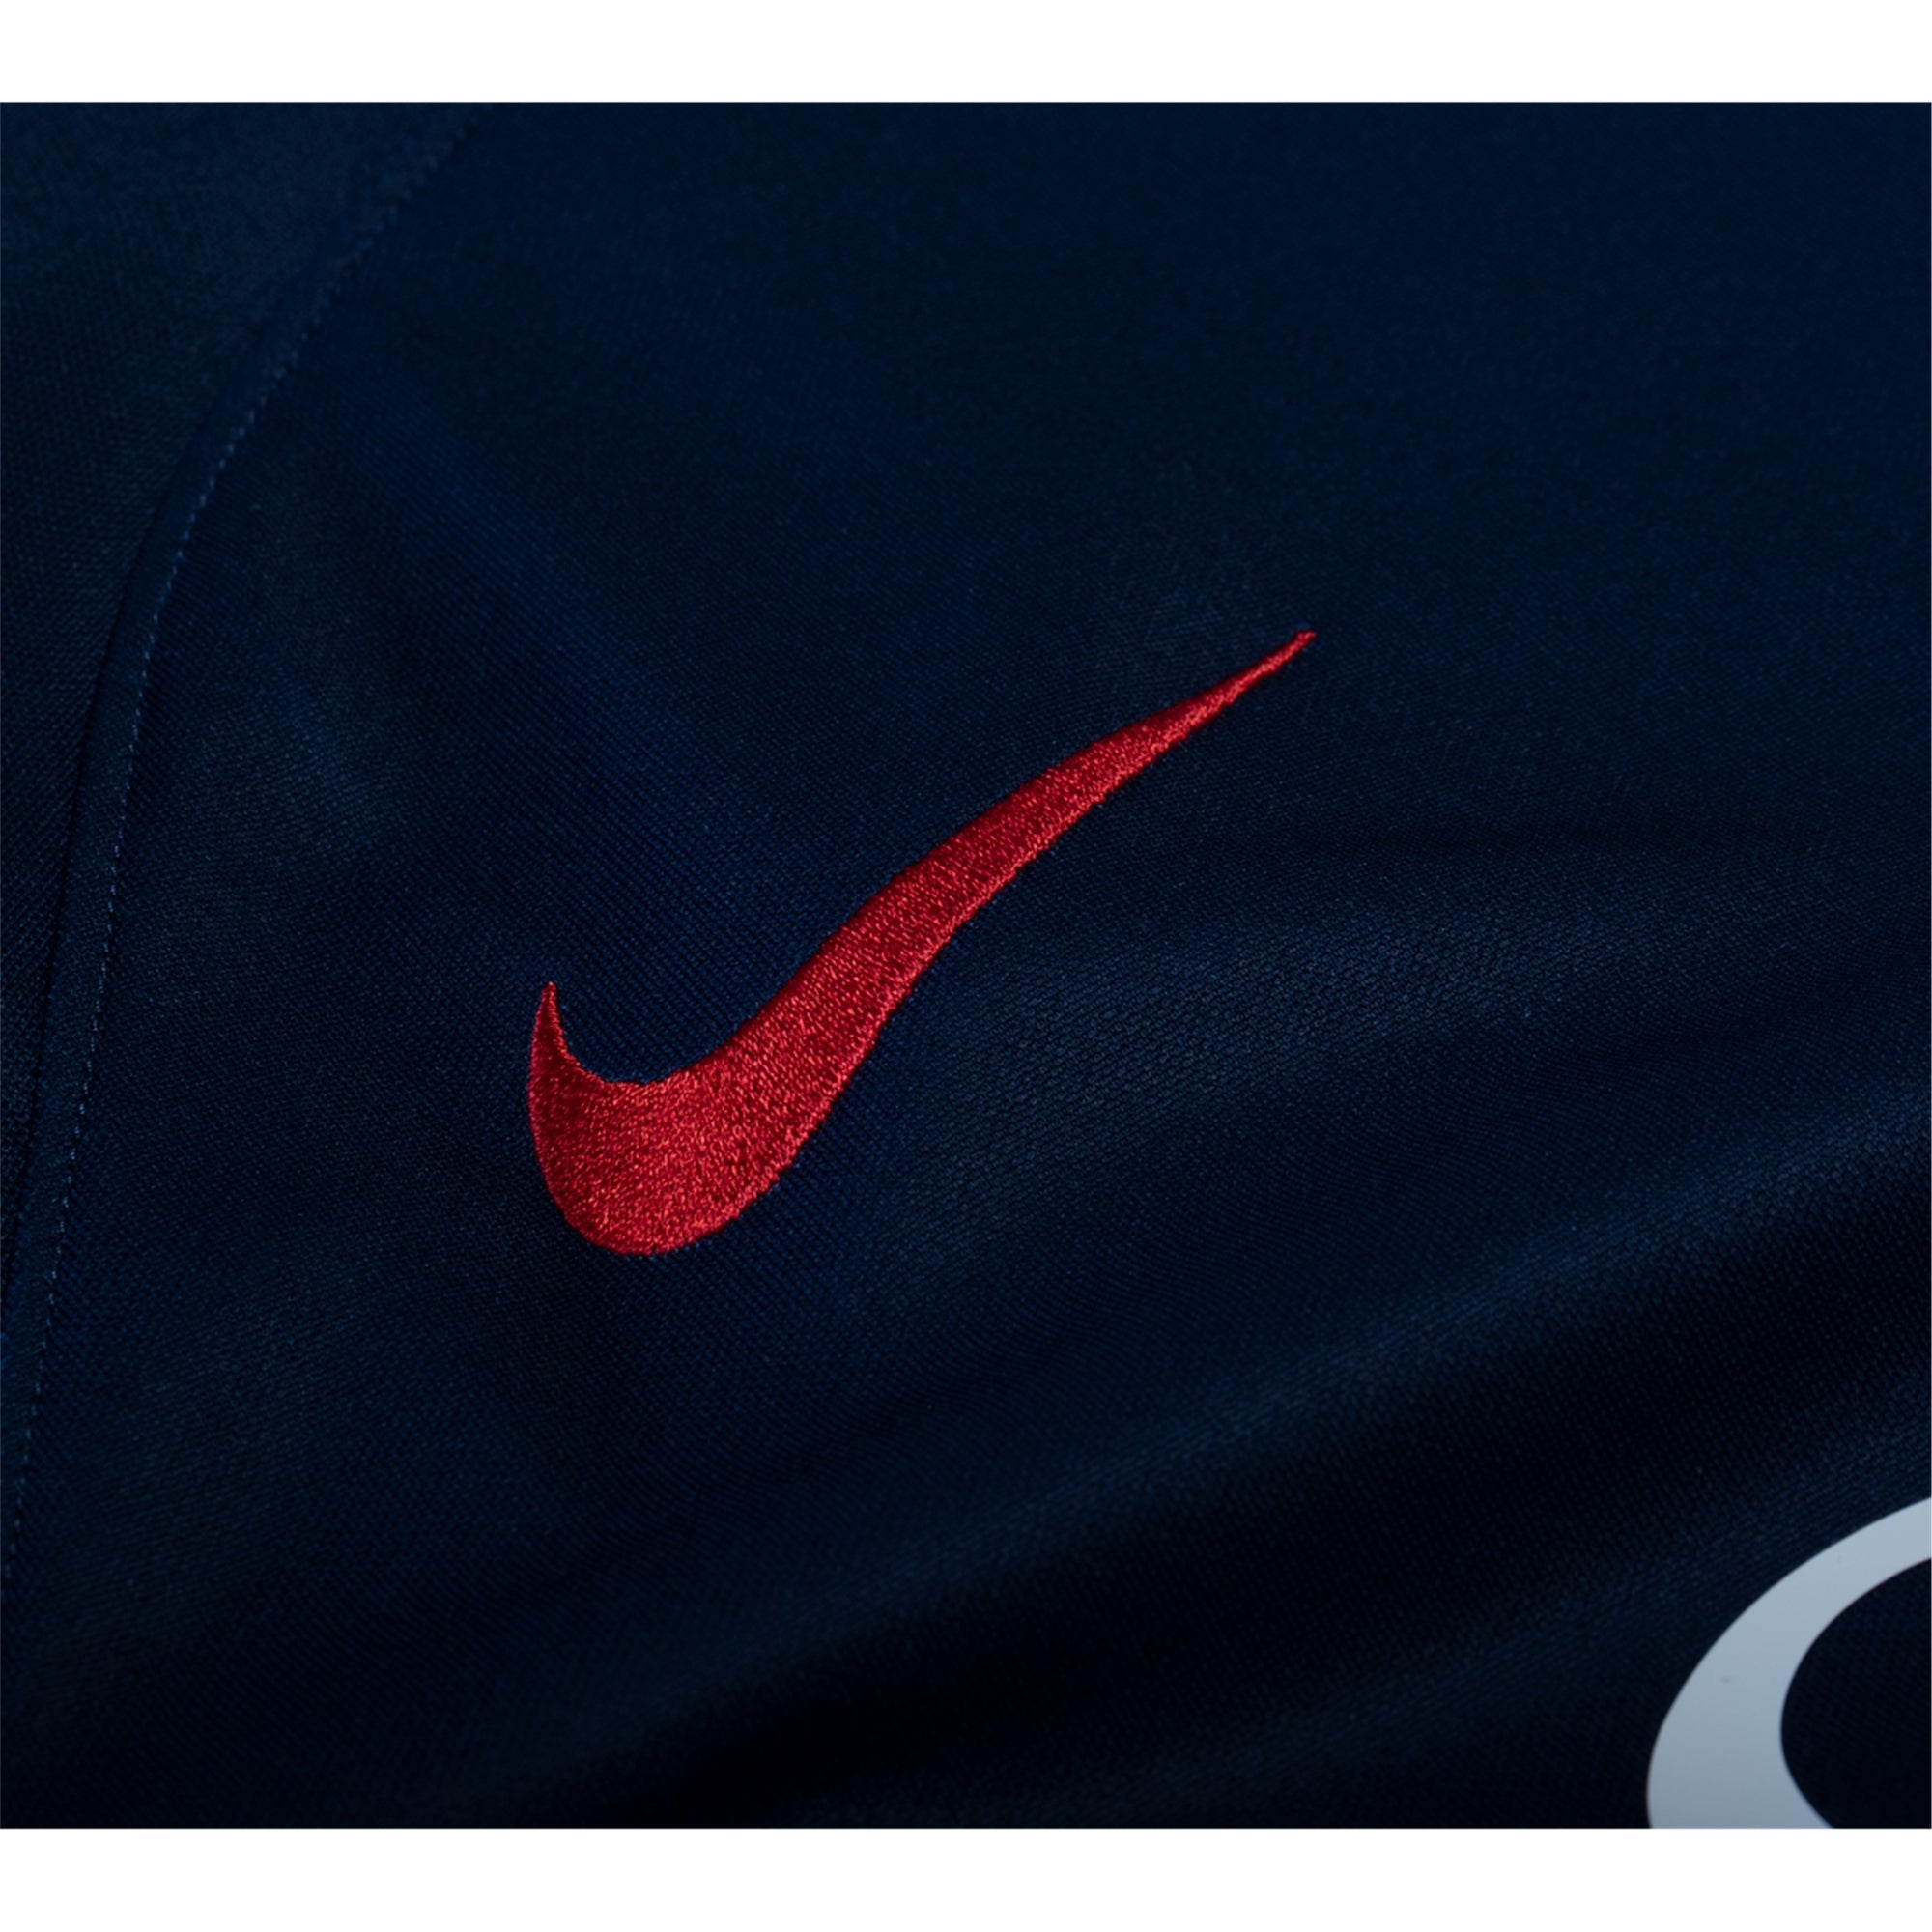 Men's Replica Nike Neymar Jr Paris Saint-Germain Home Jersey 22/23  DM1844-411 – Soccer Zone USA